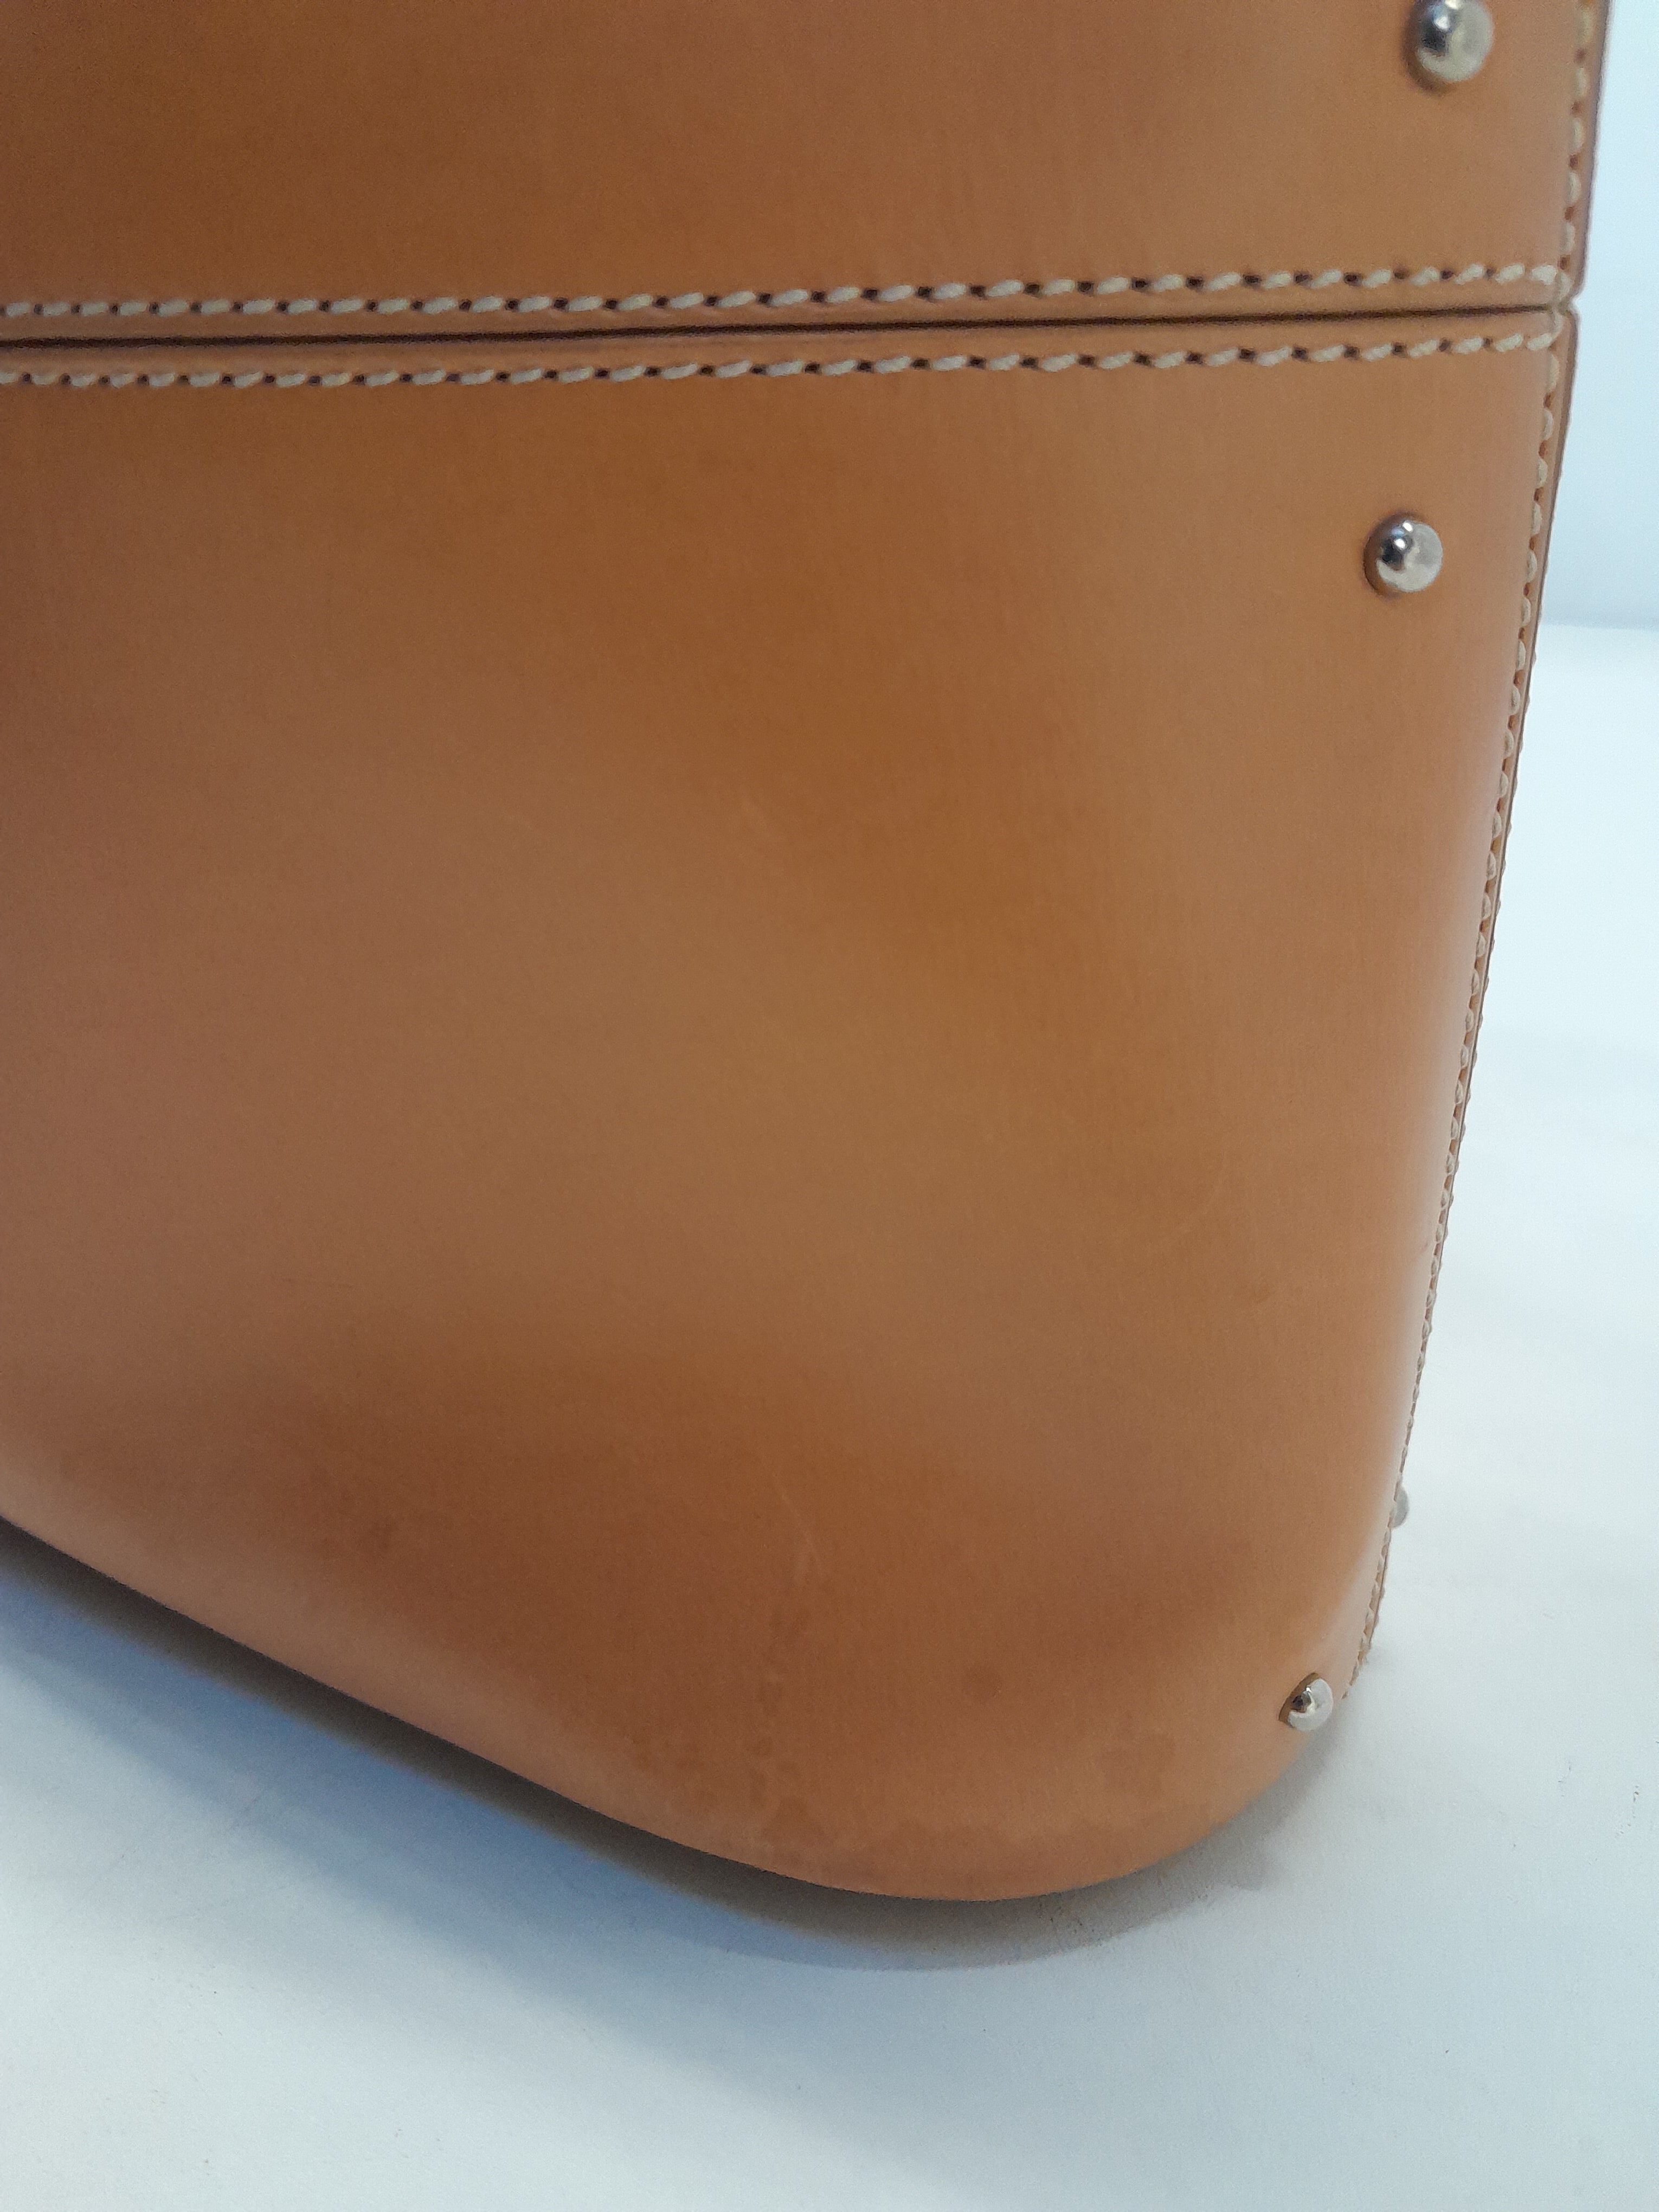 Tod's beige leather handbag